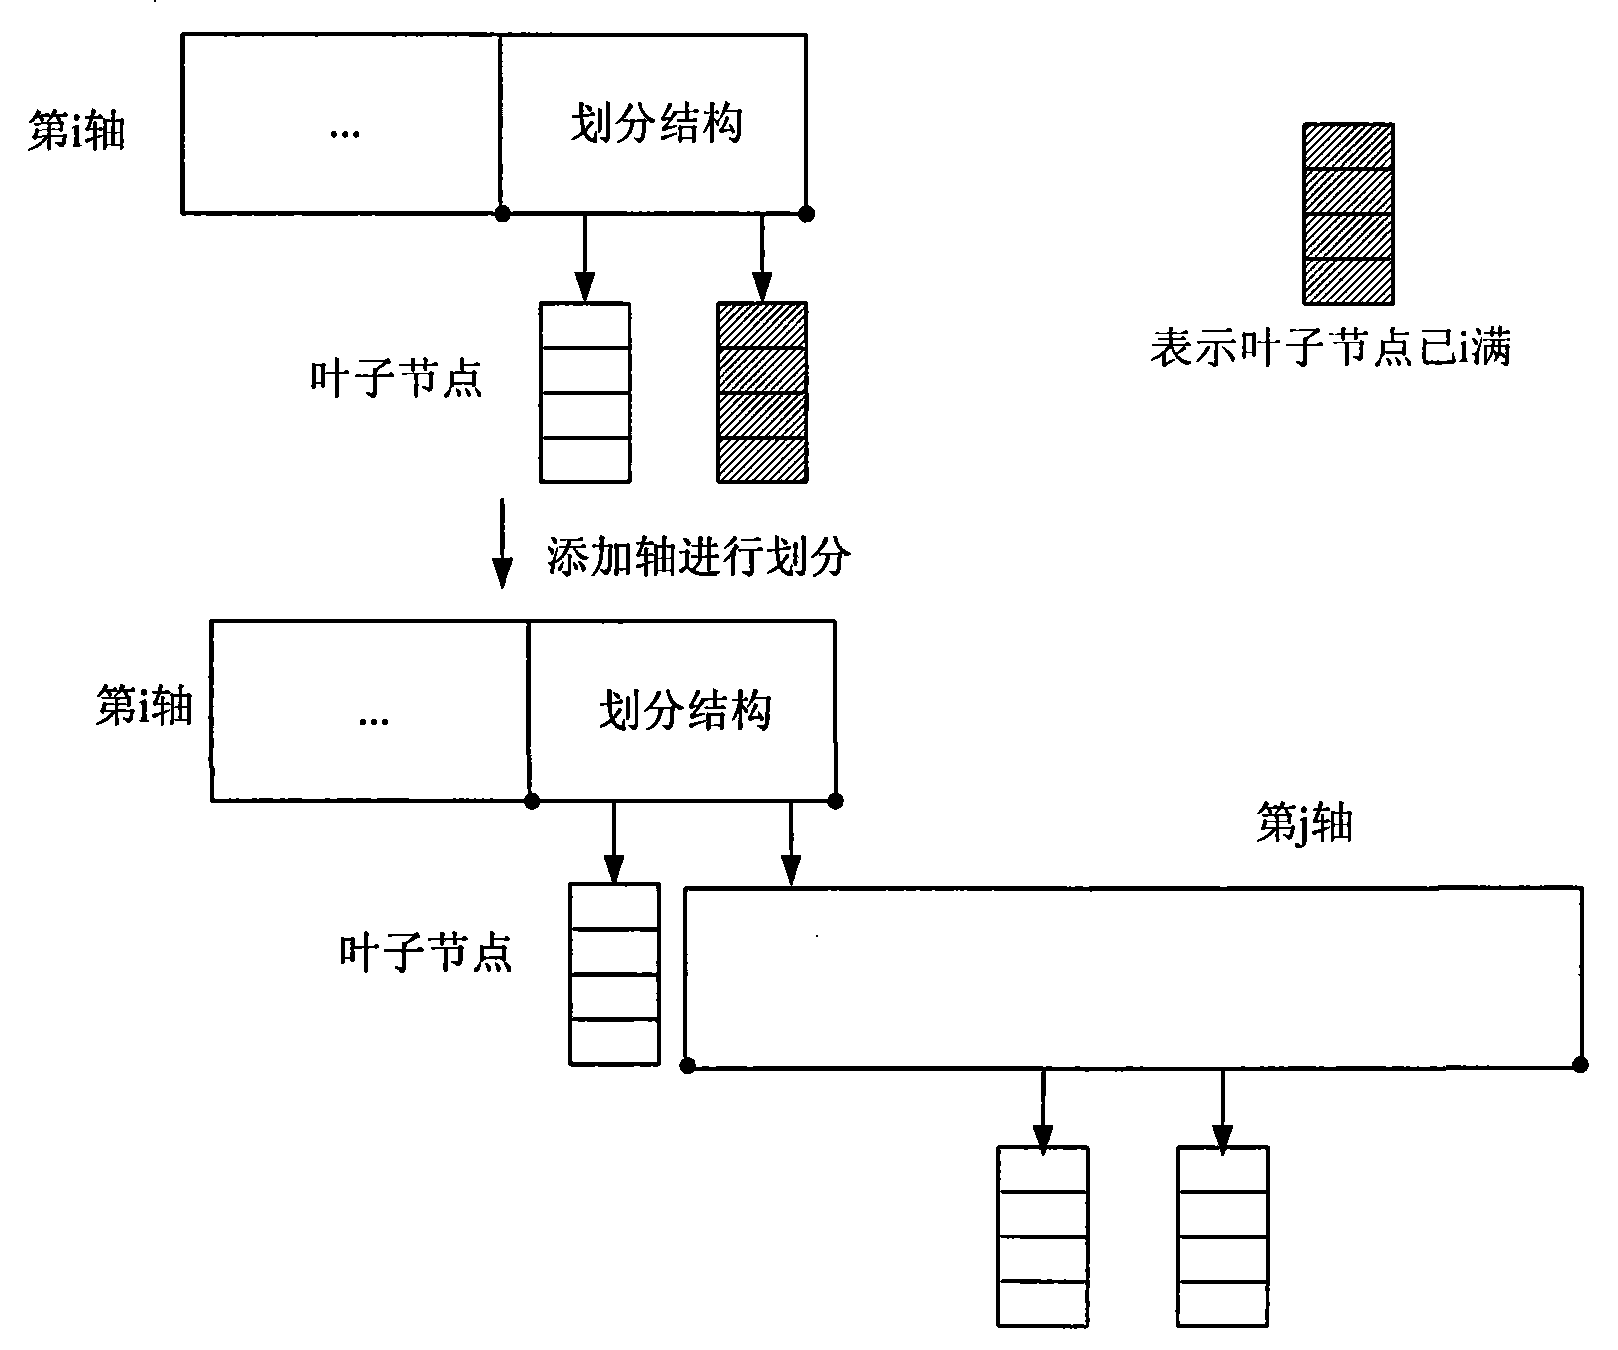 High-dimension index structure technique of equipment failure cases based on distance measurement